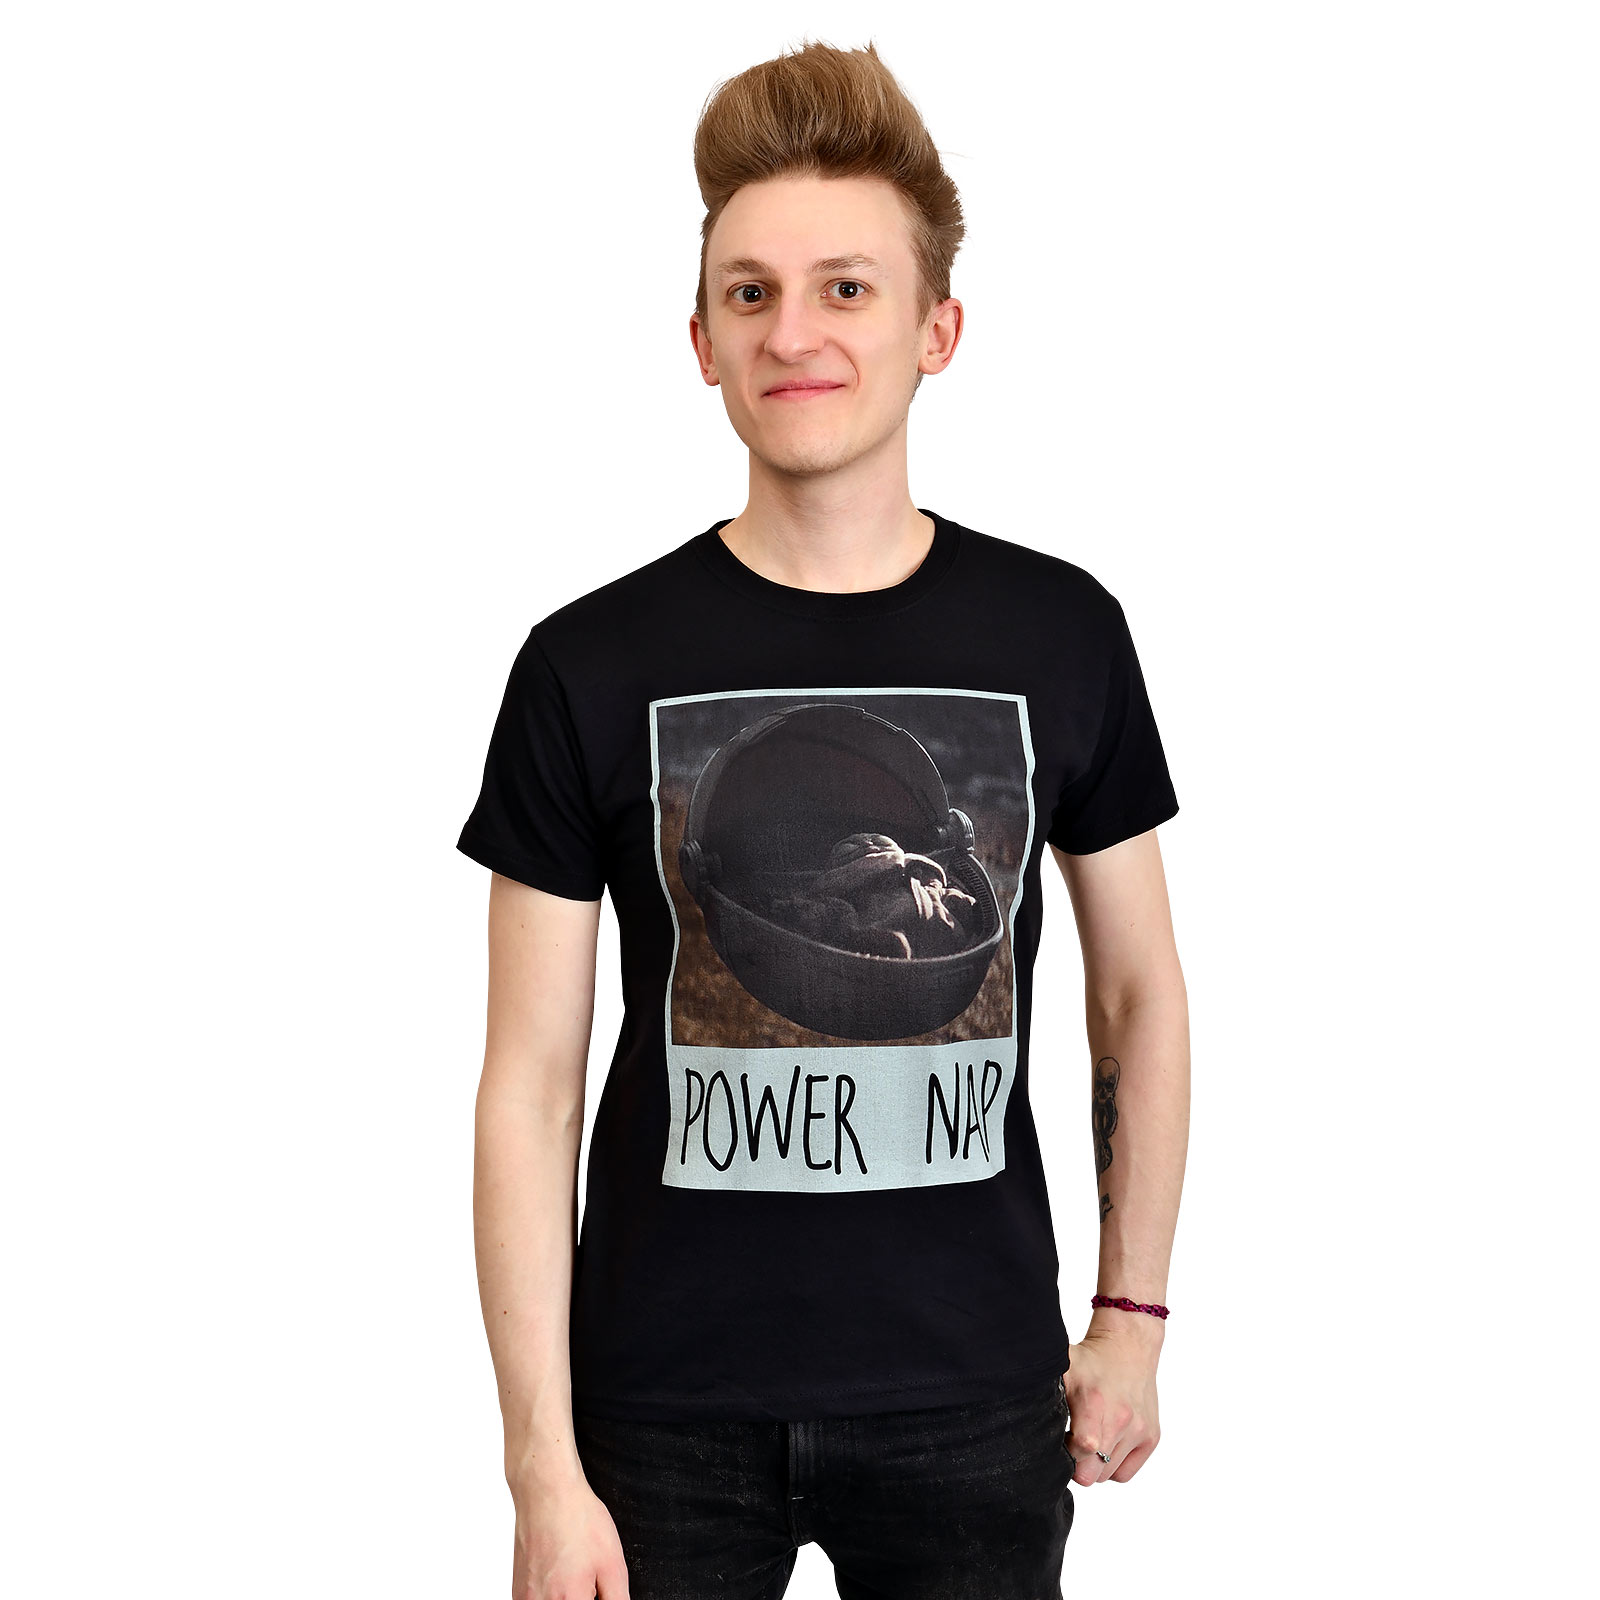 The Child Power Nap T-Shirt schwarz - Star Wars The Mandalorian